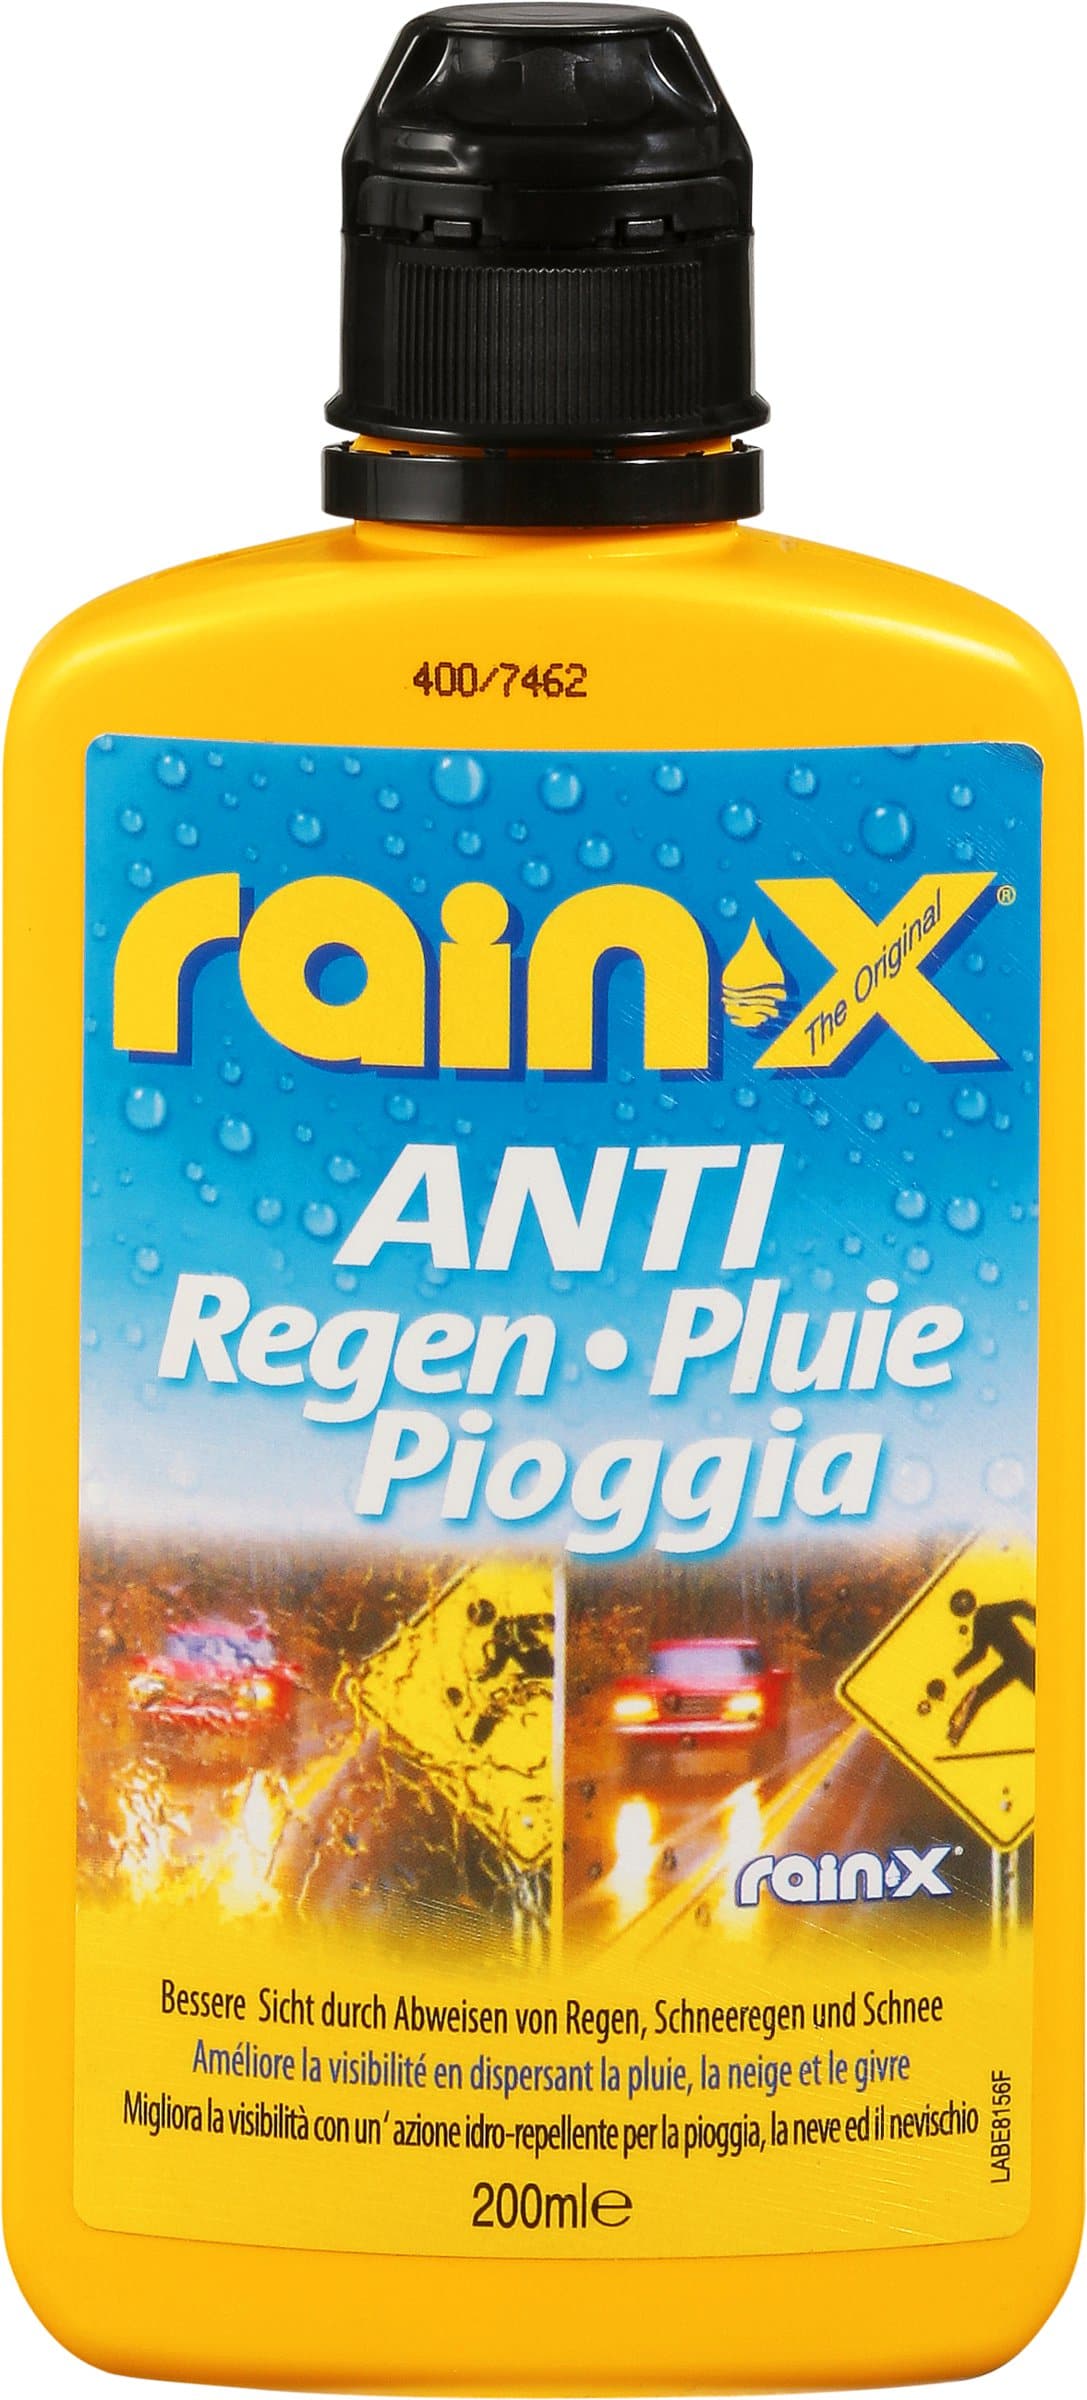 Rain-X Anti-Regen 200ml